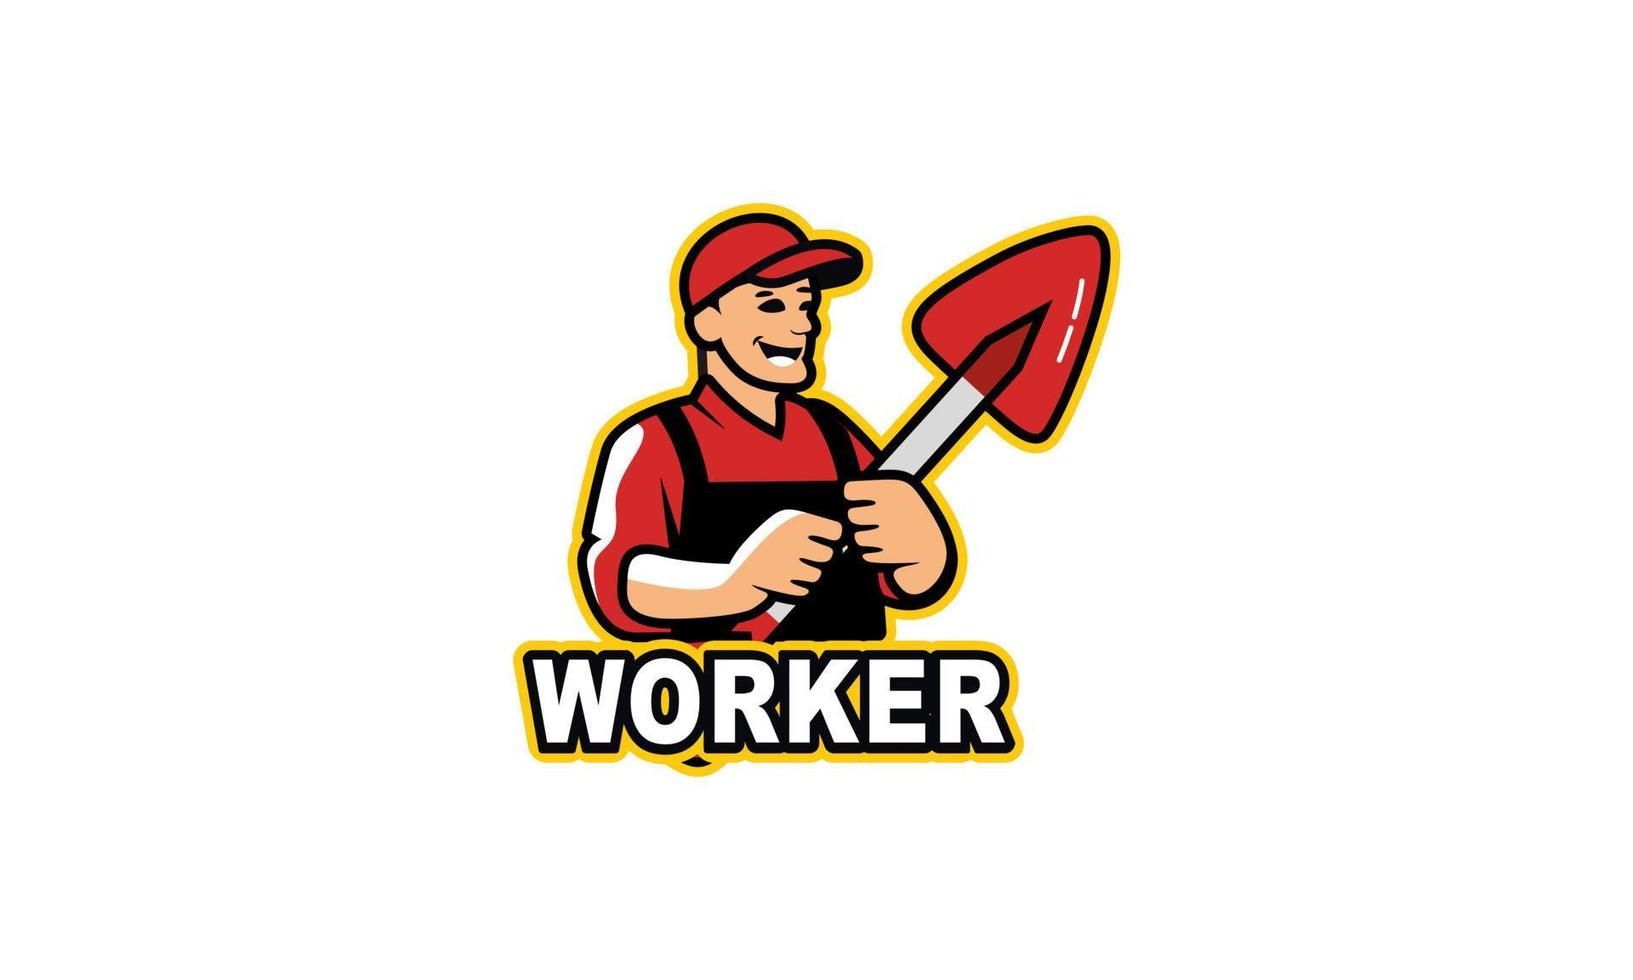 Service worker logo vector illustration